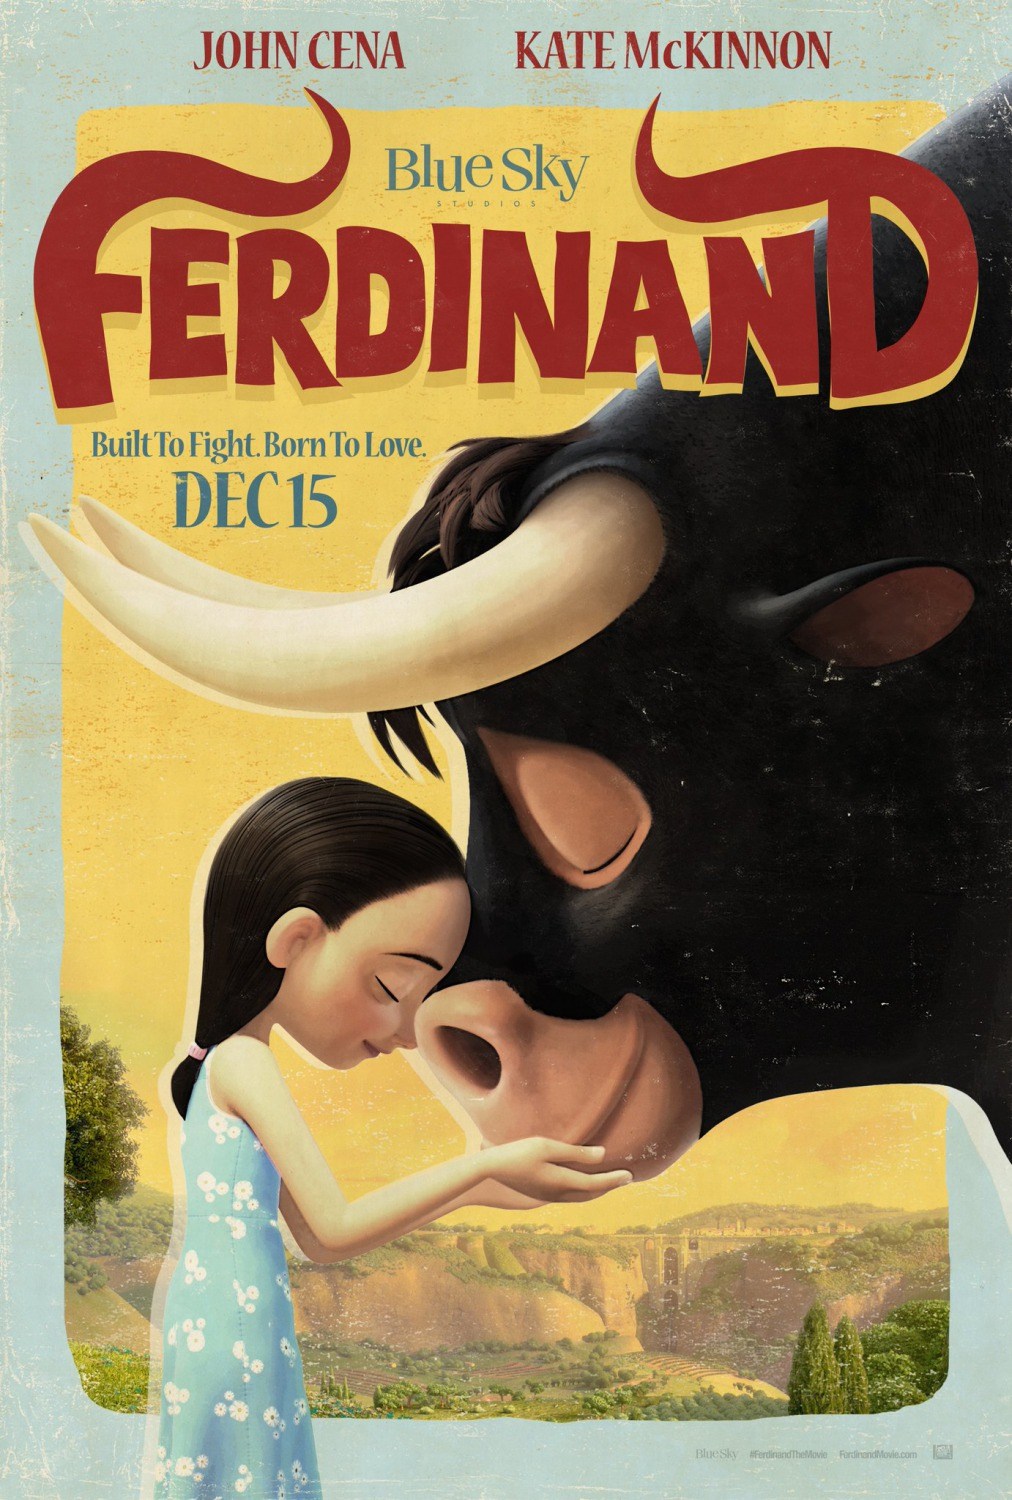 "Ferdinand"Miami Screening - Saturday December 9th